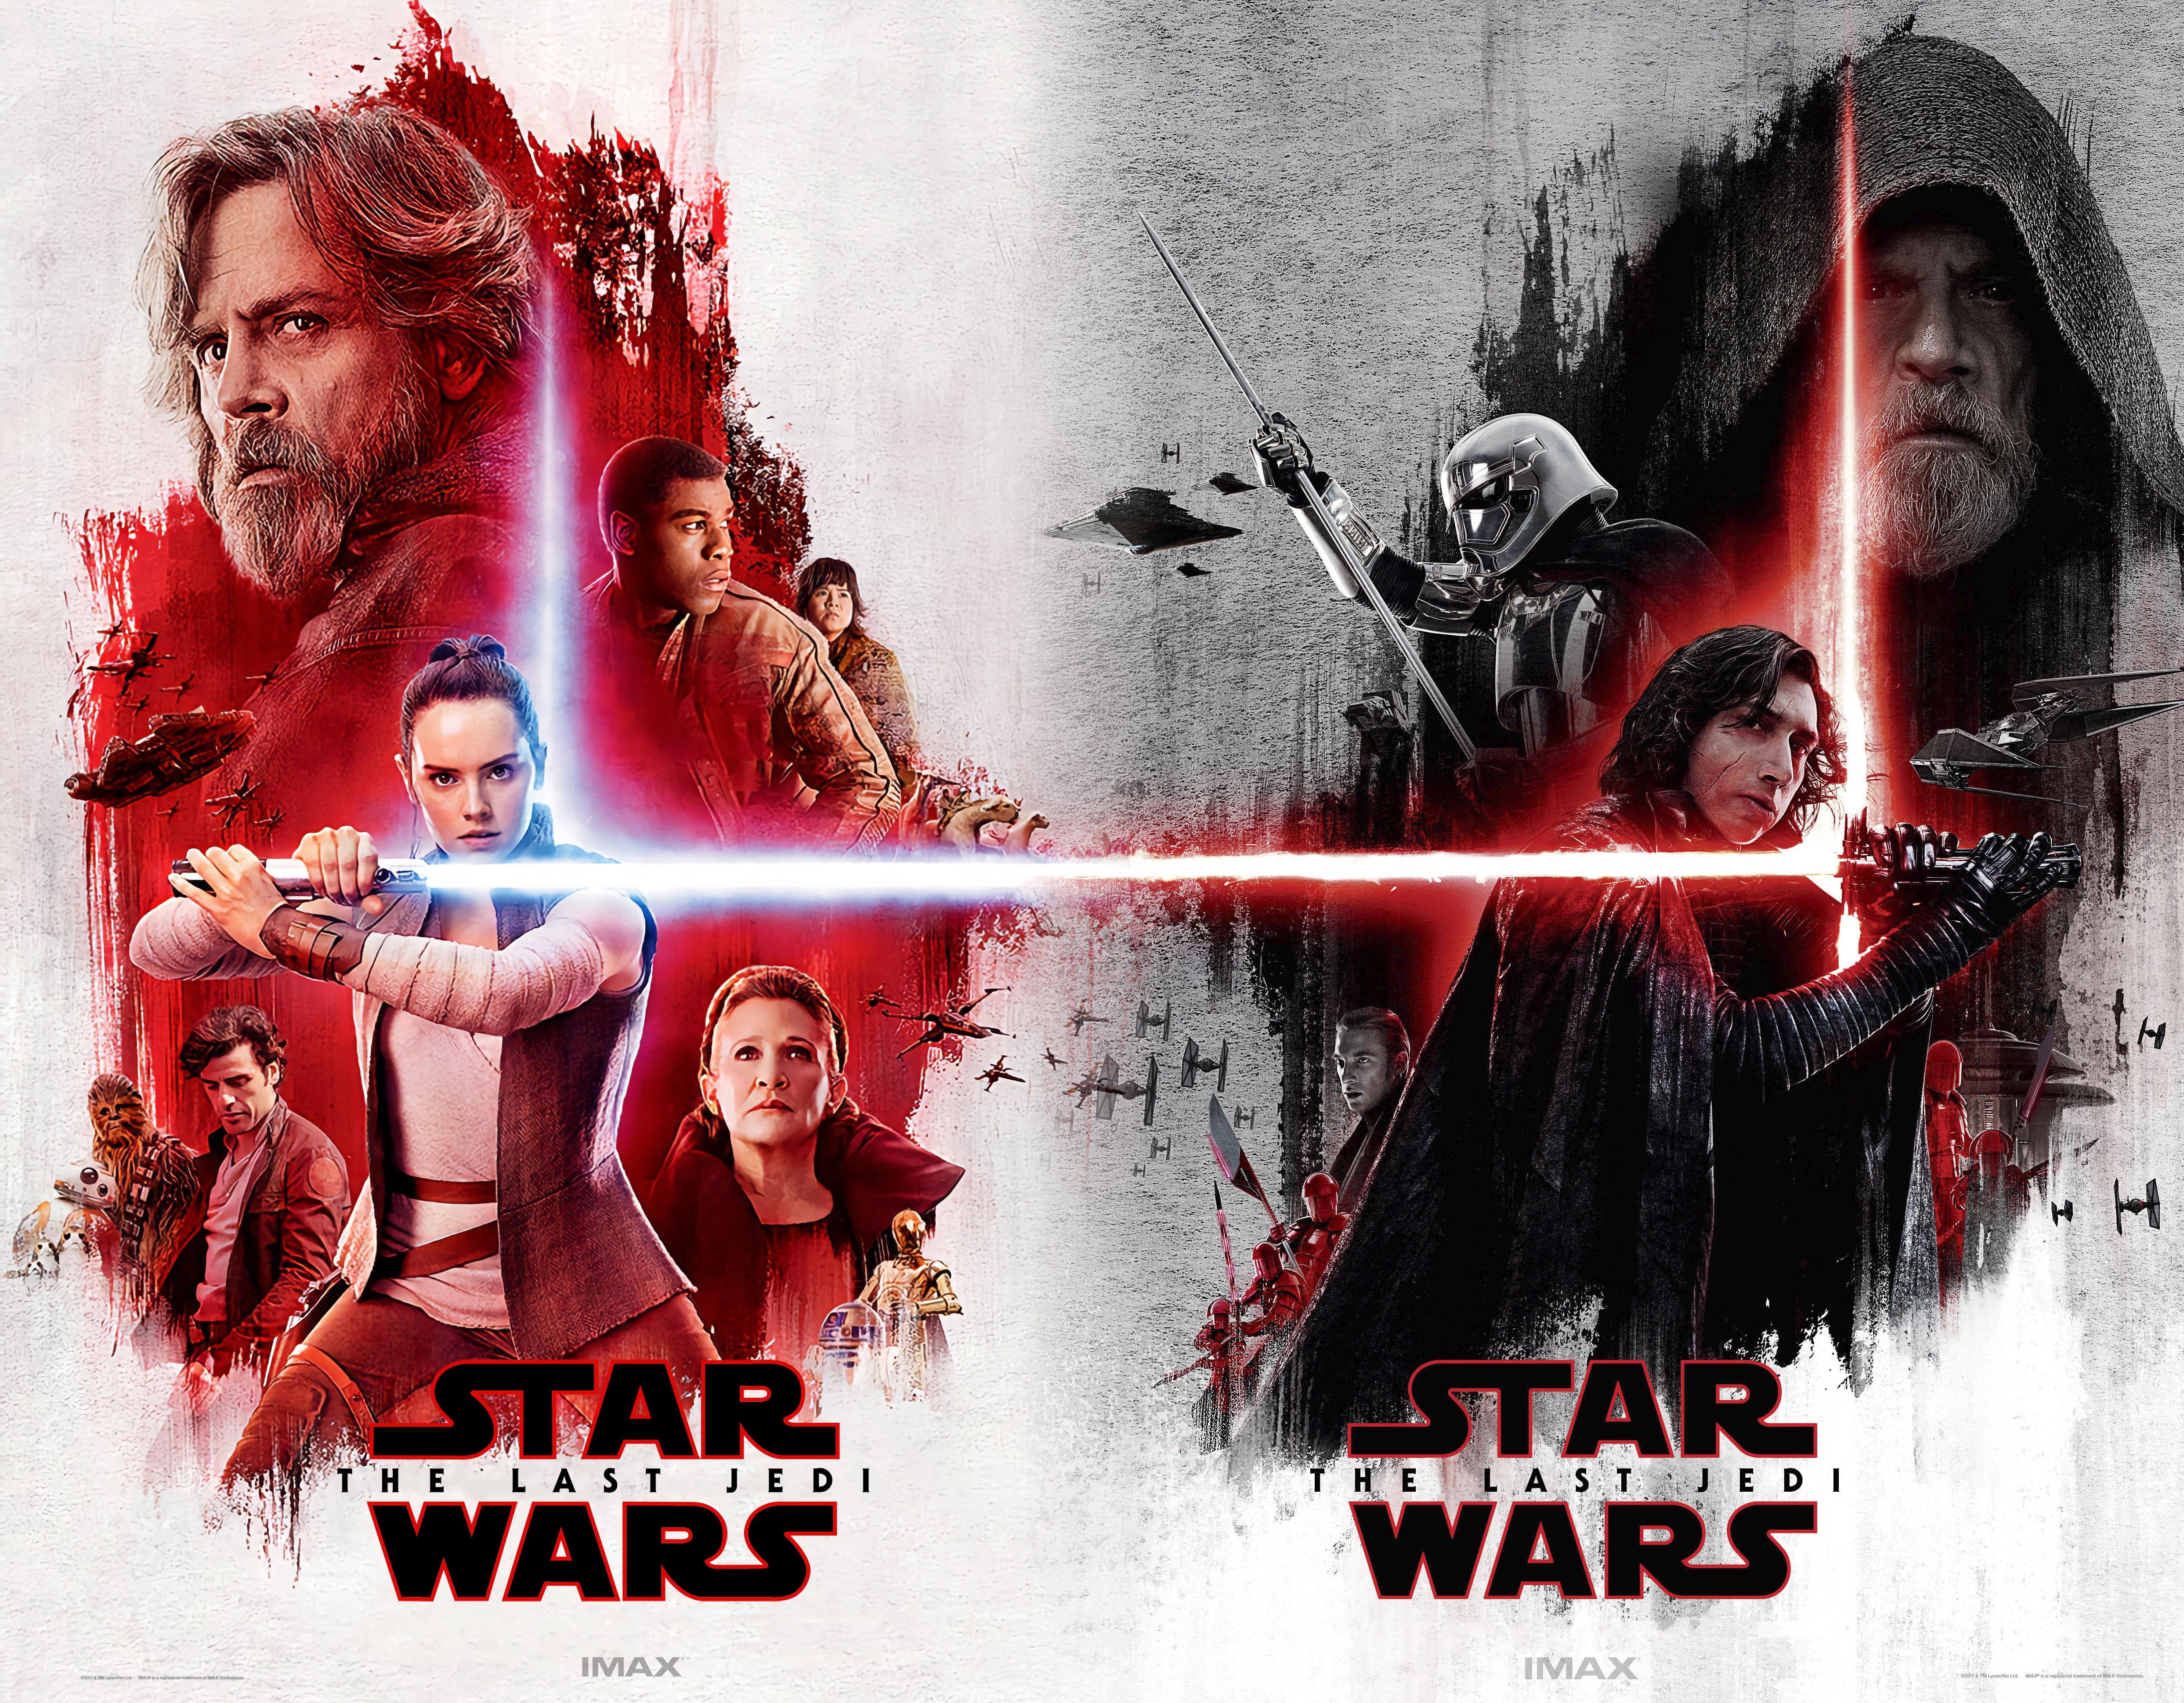 Star Wars graphic cover, Star Wars: The Last Jedi, Luke Skywalker, lightsaber